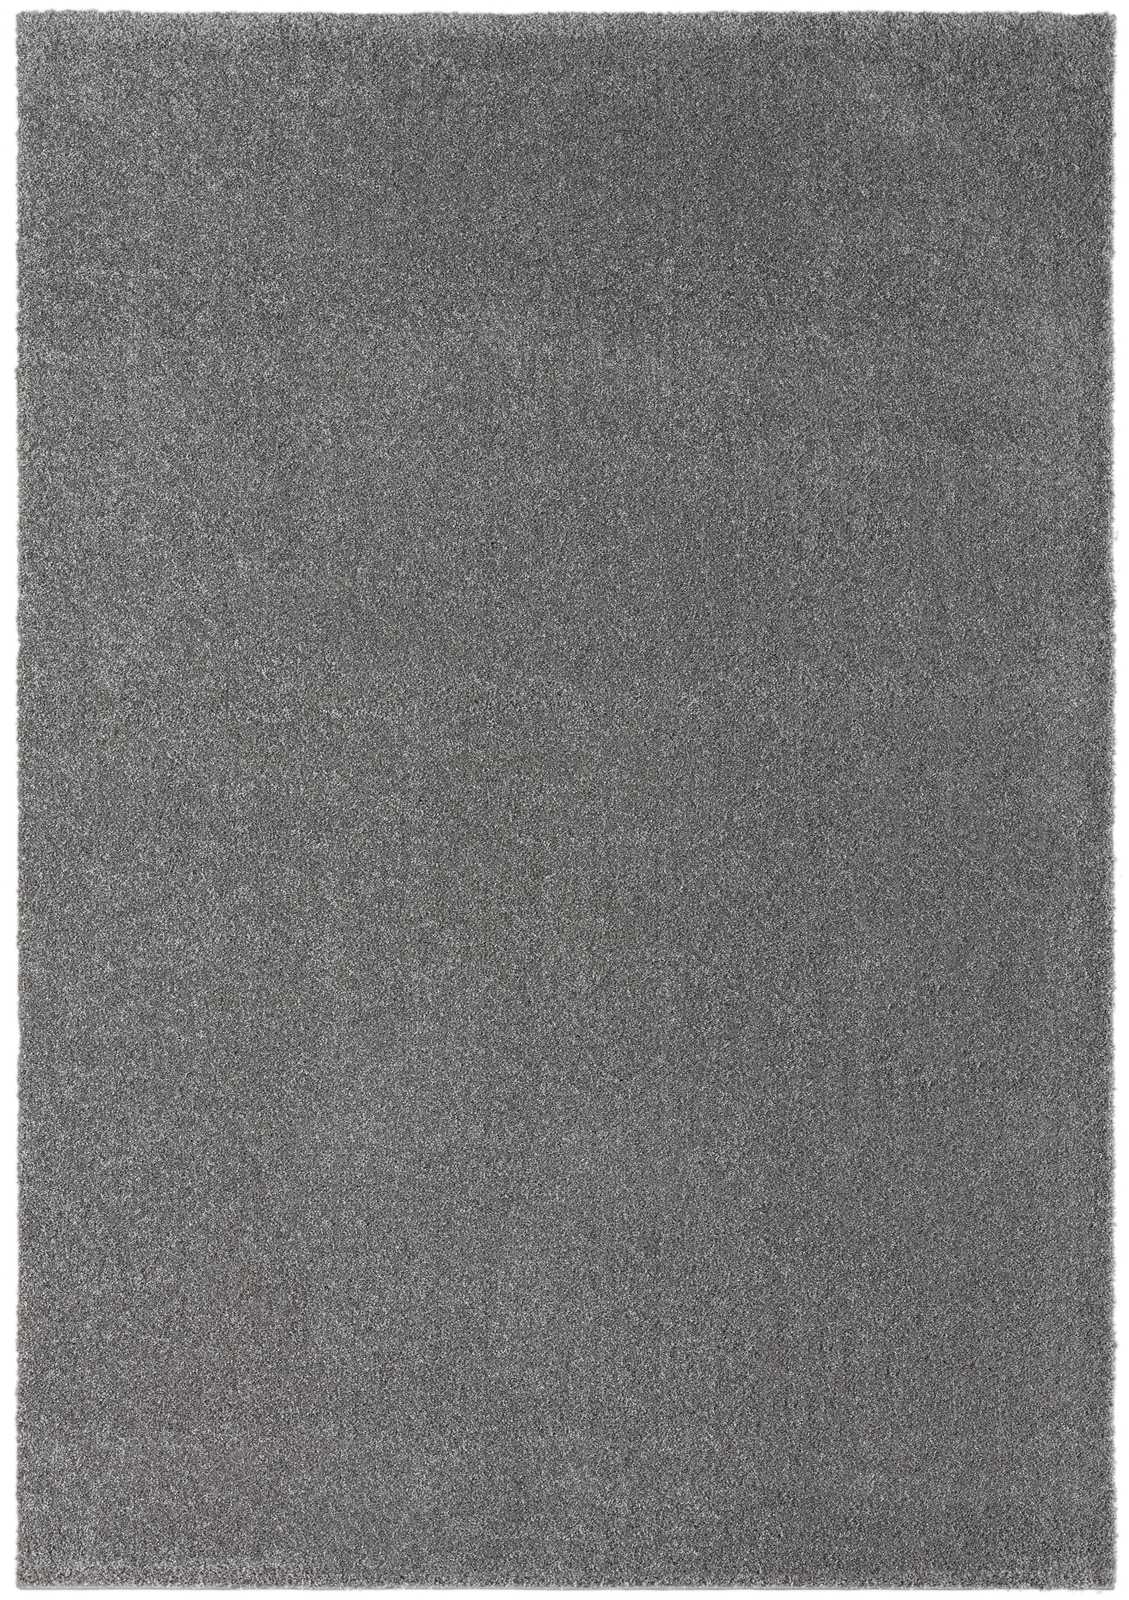             Fluffy short pile carpet in grey - 200 x 140 cm
        